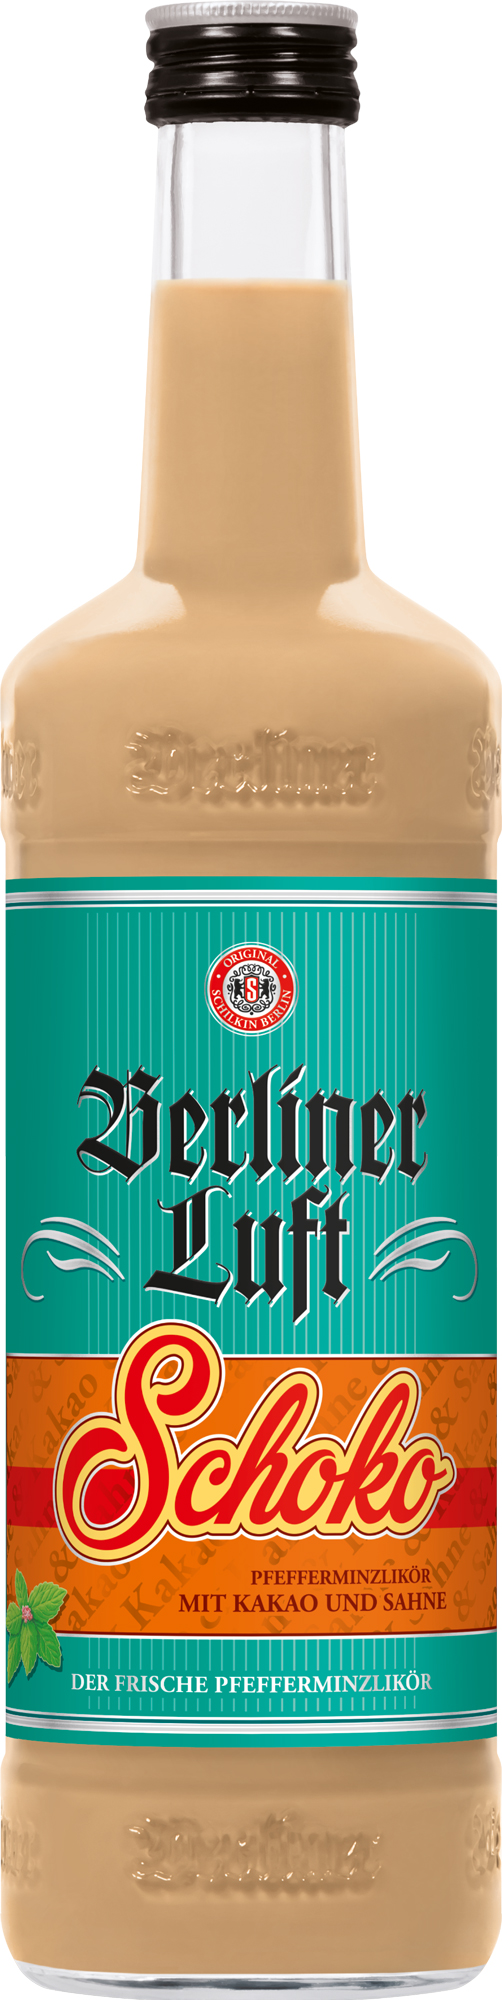 Berliner Luft - Schoko - Pfefferminzlikör 0,7l 15%vol.